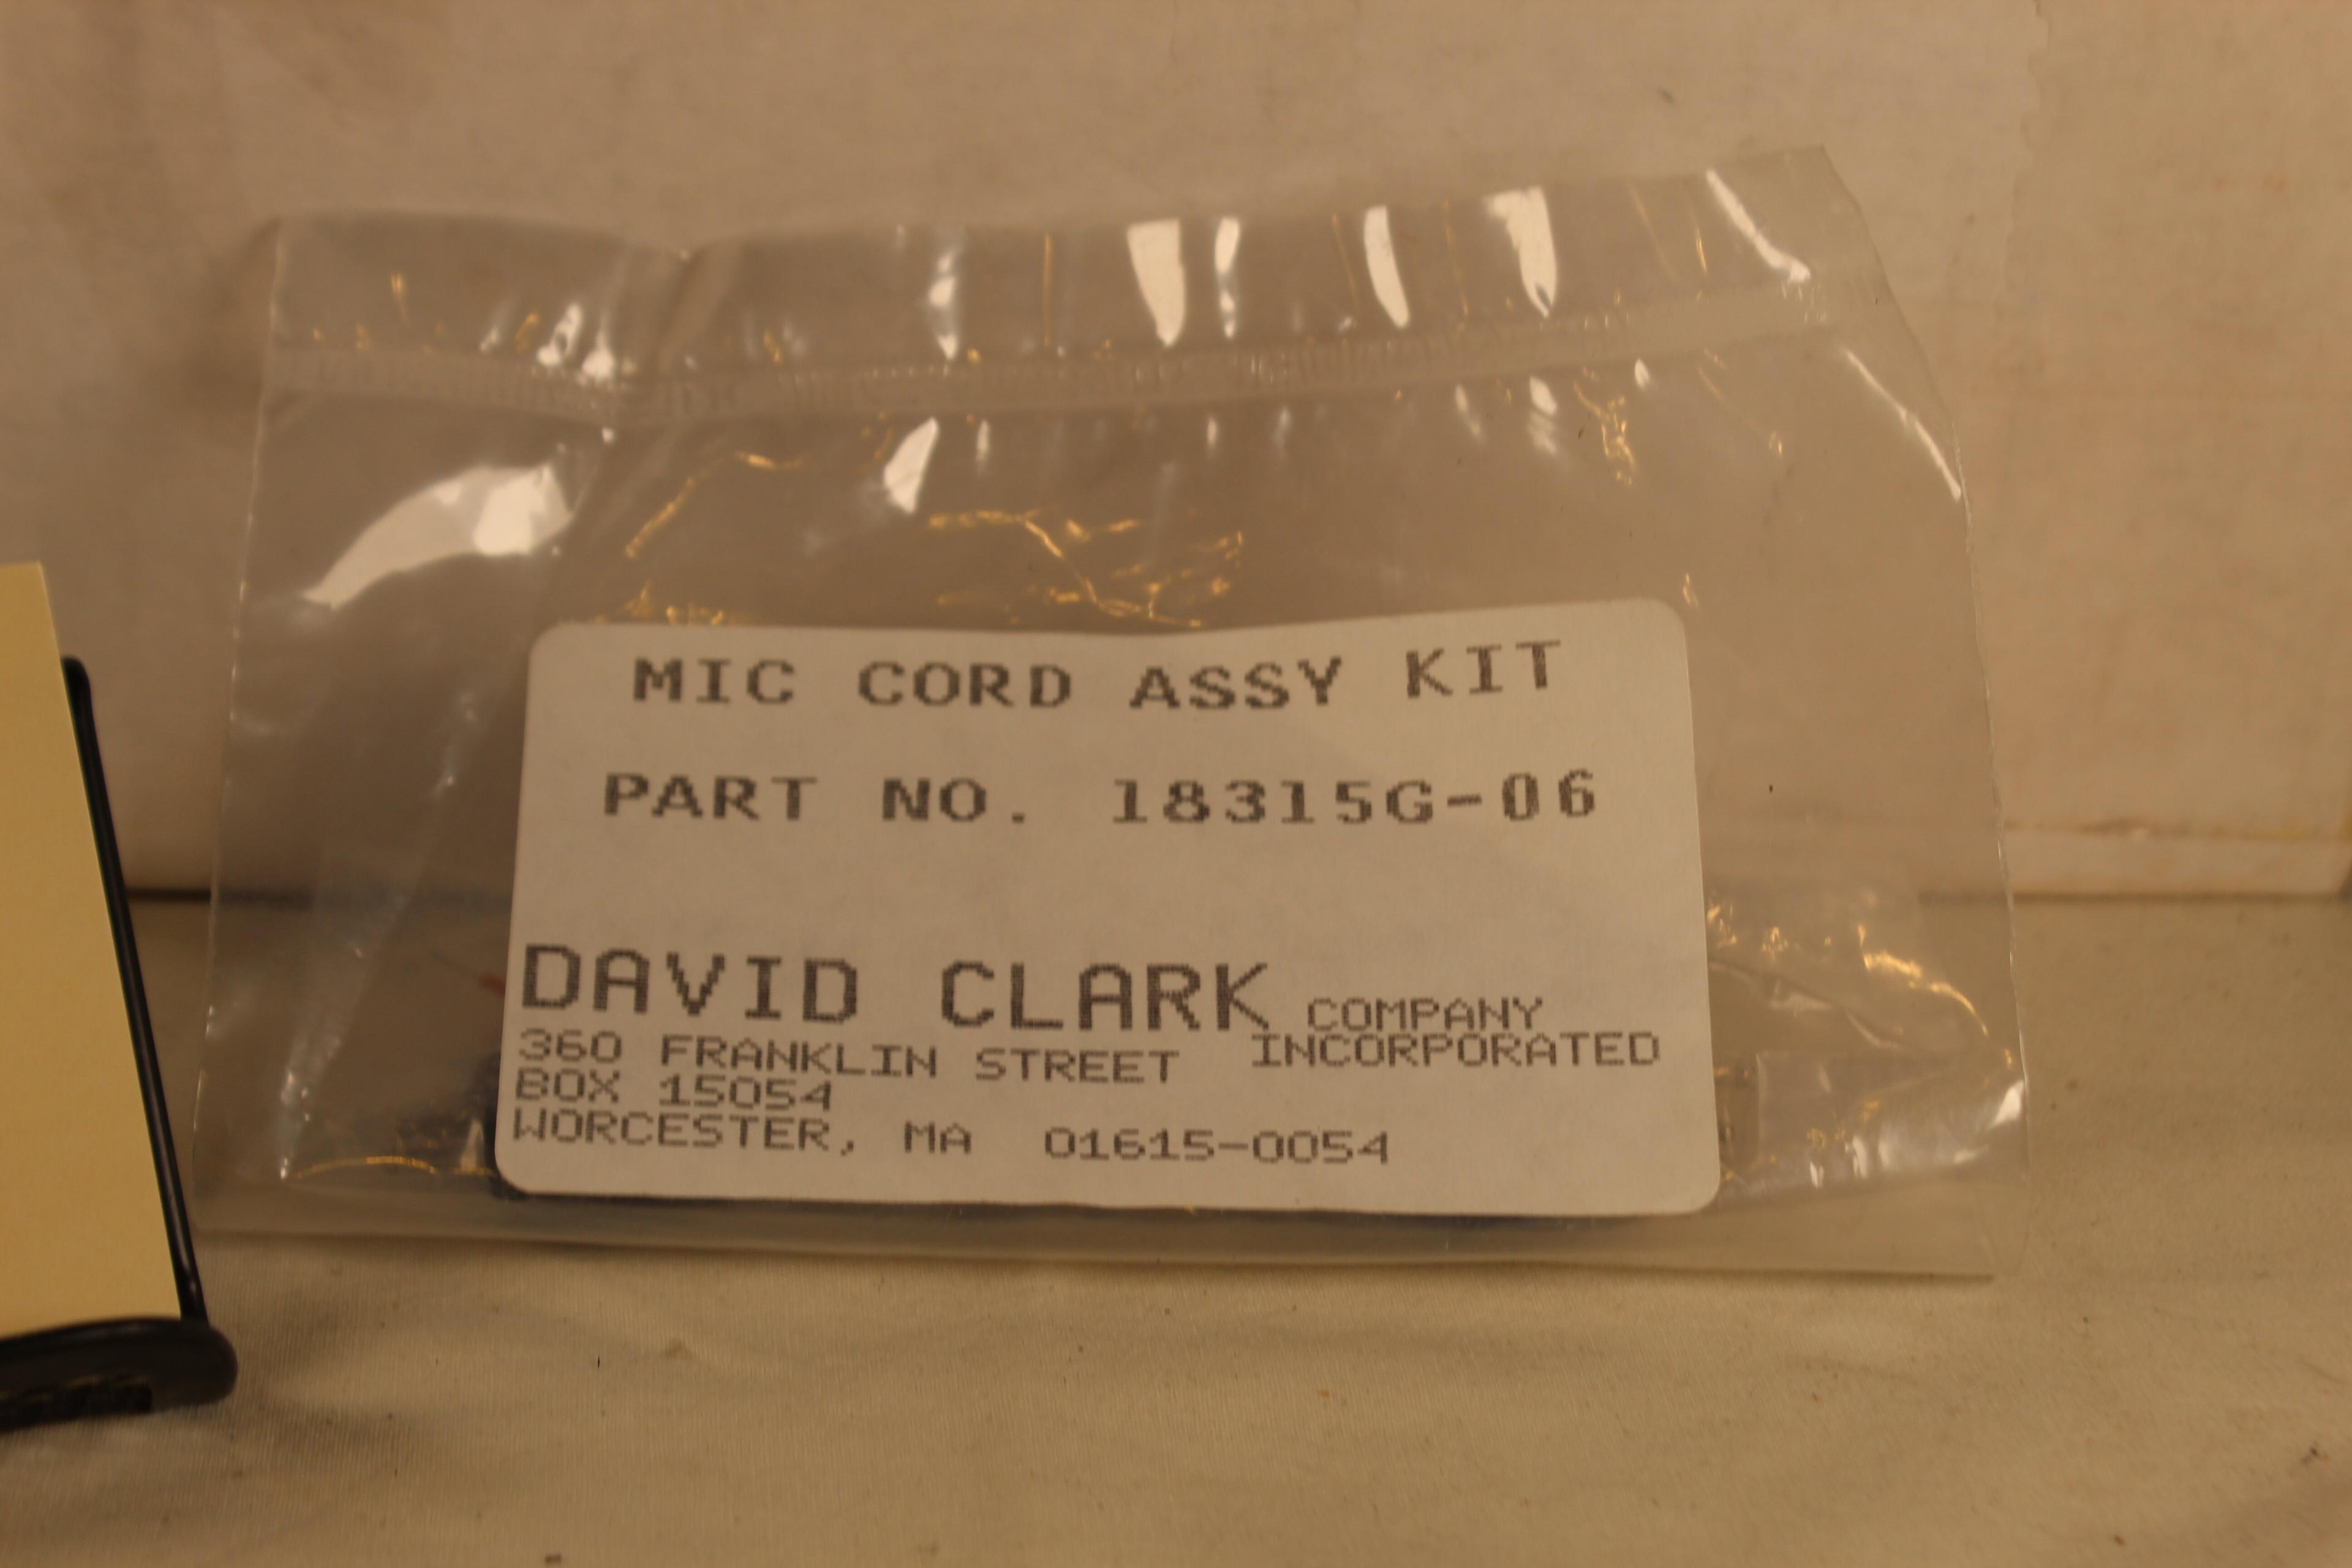 David Clark Microphone Cord Assembly Kits PN 18315G-06